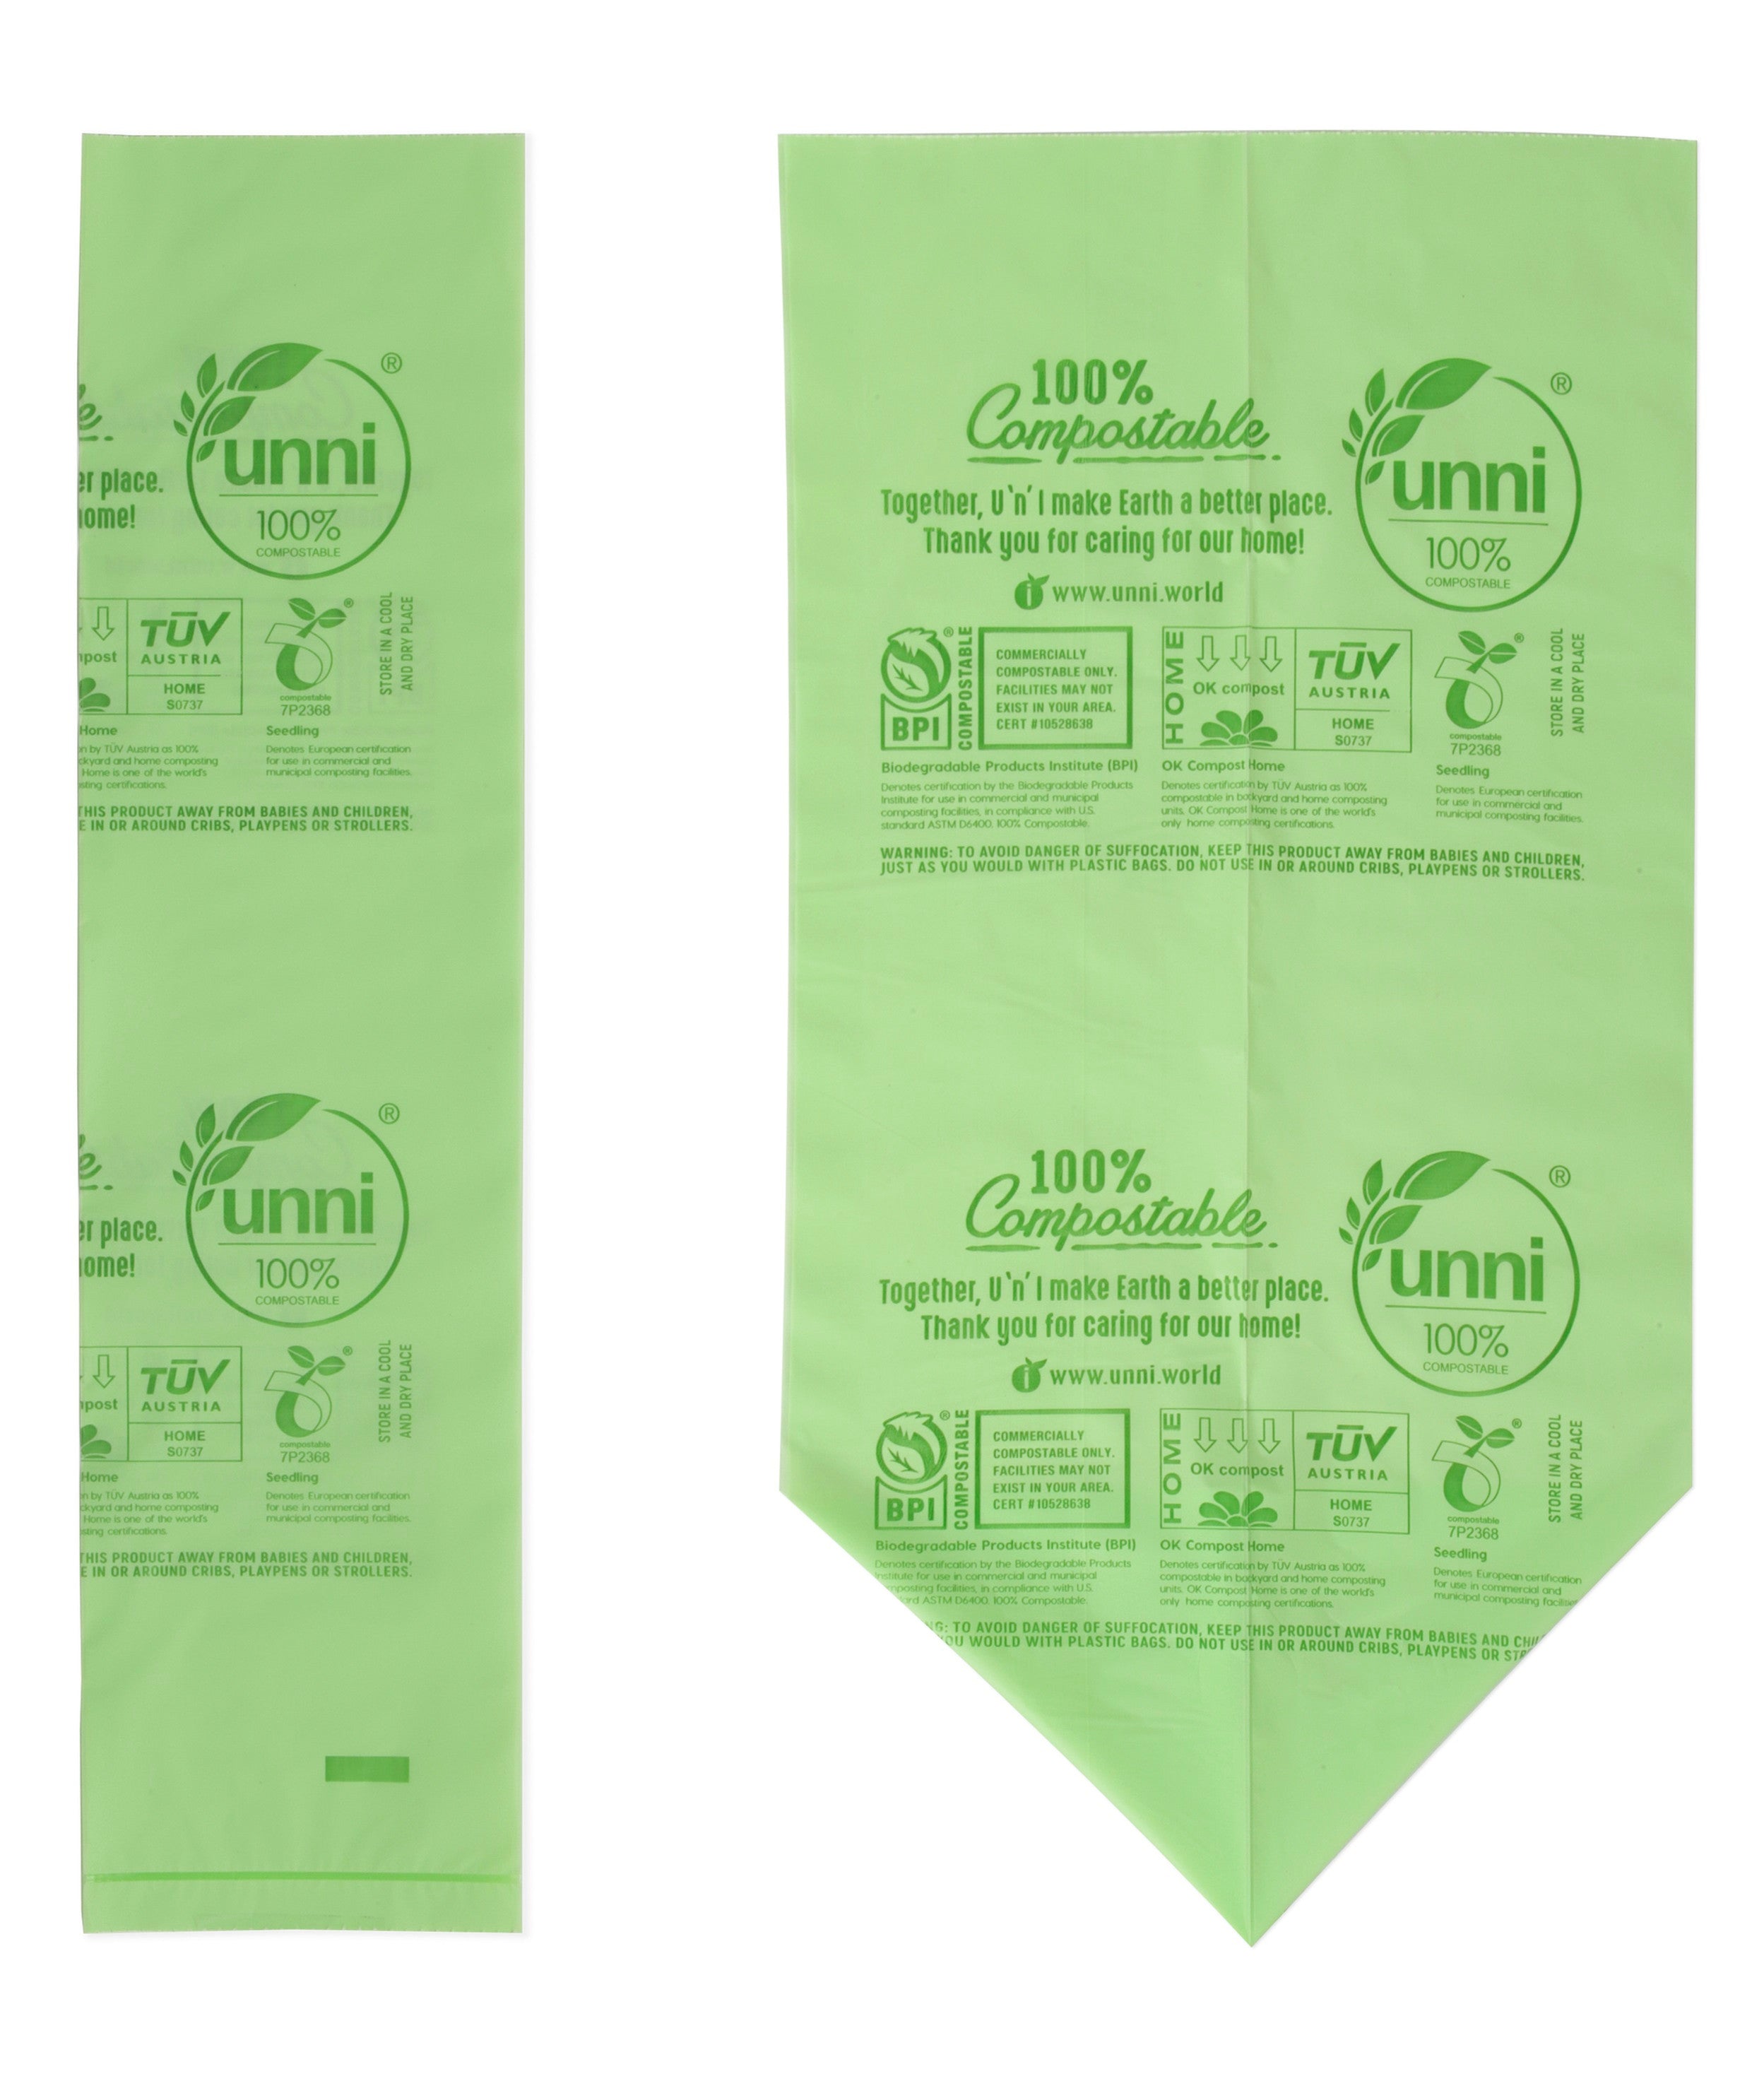 8 Gallon Garbage Bags, Medium Garbage Bags, Garbage Bag Recycling & Garbage  Bags, Compostable Bags (Green)